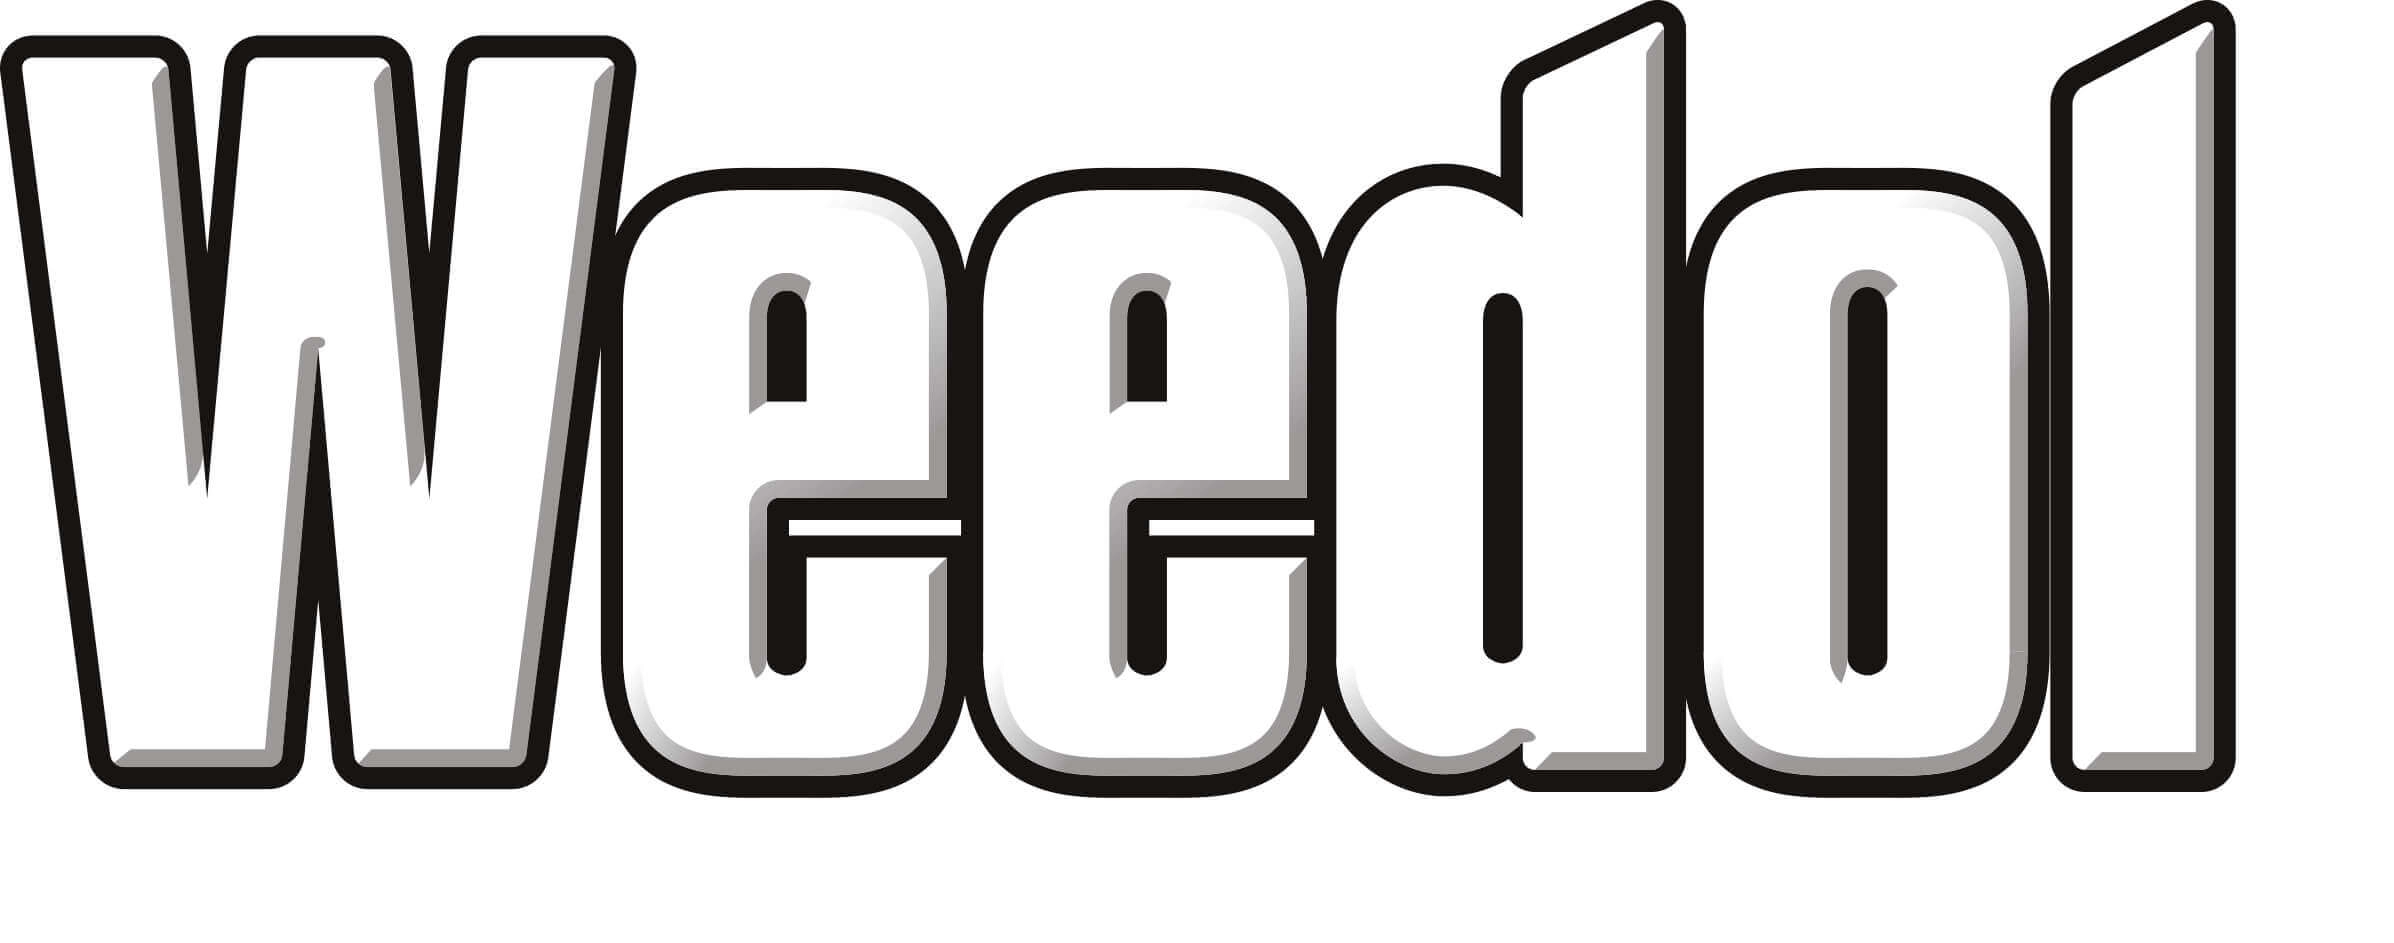 Weedol logo